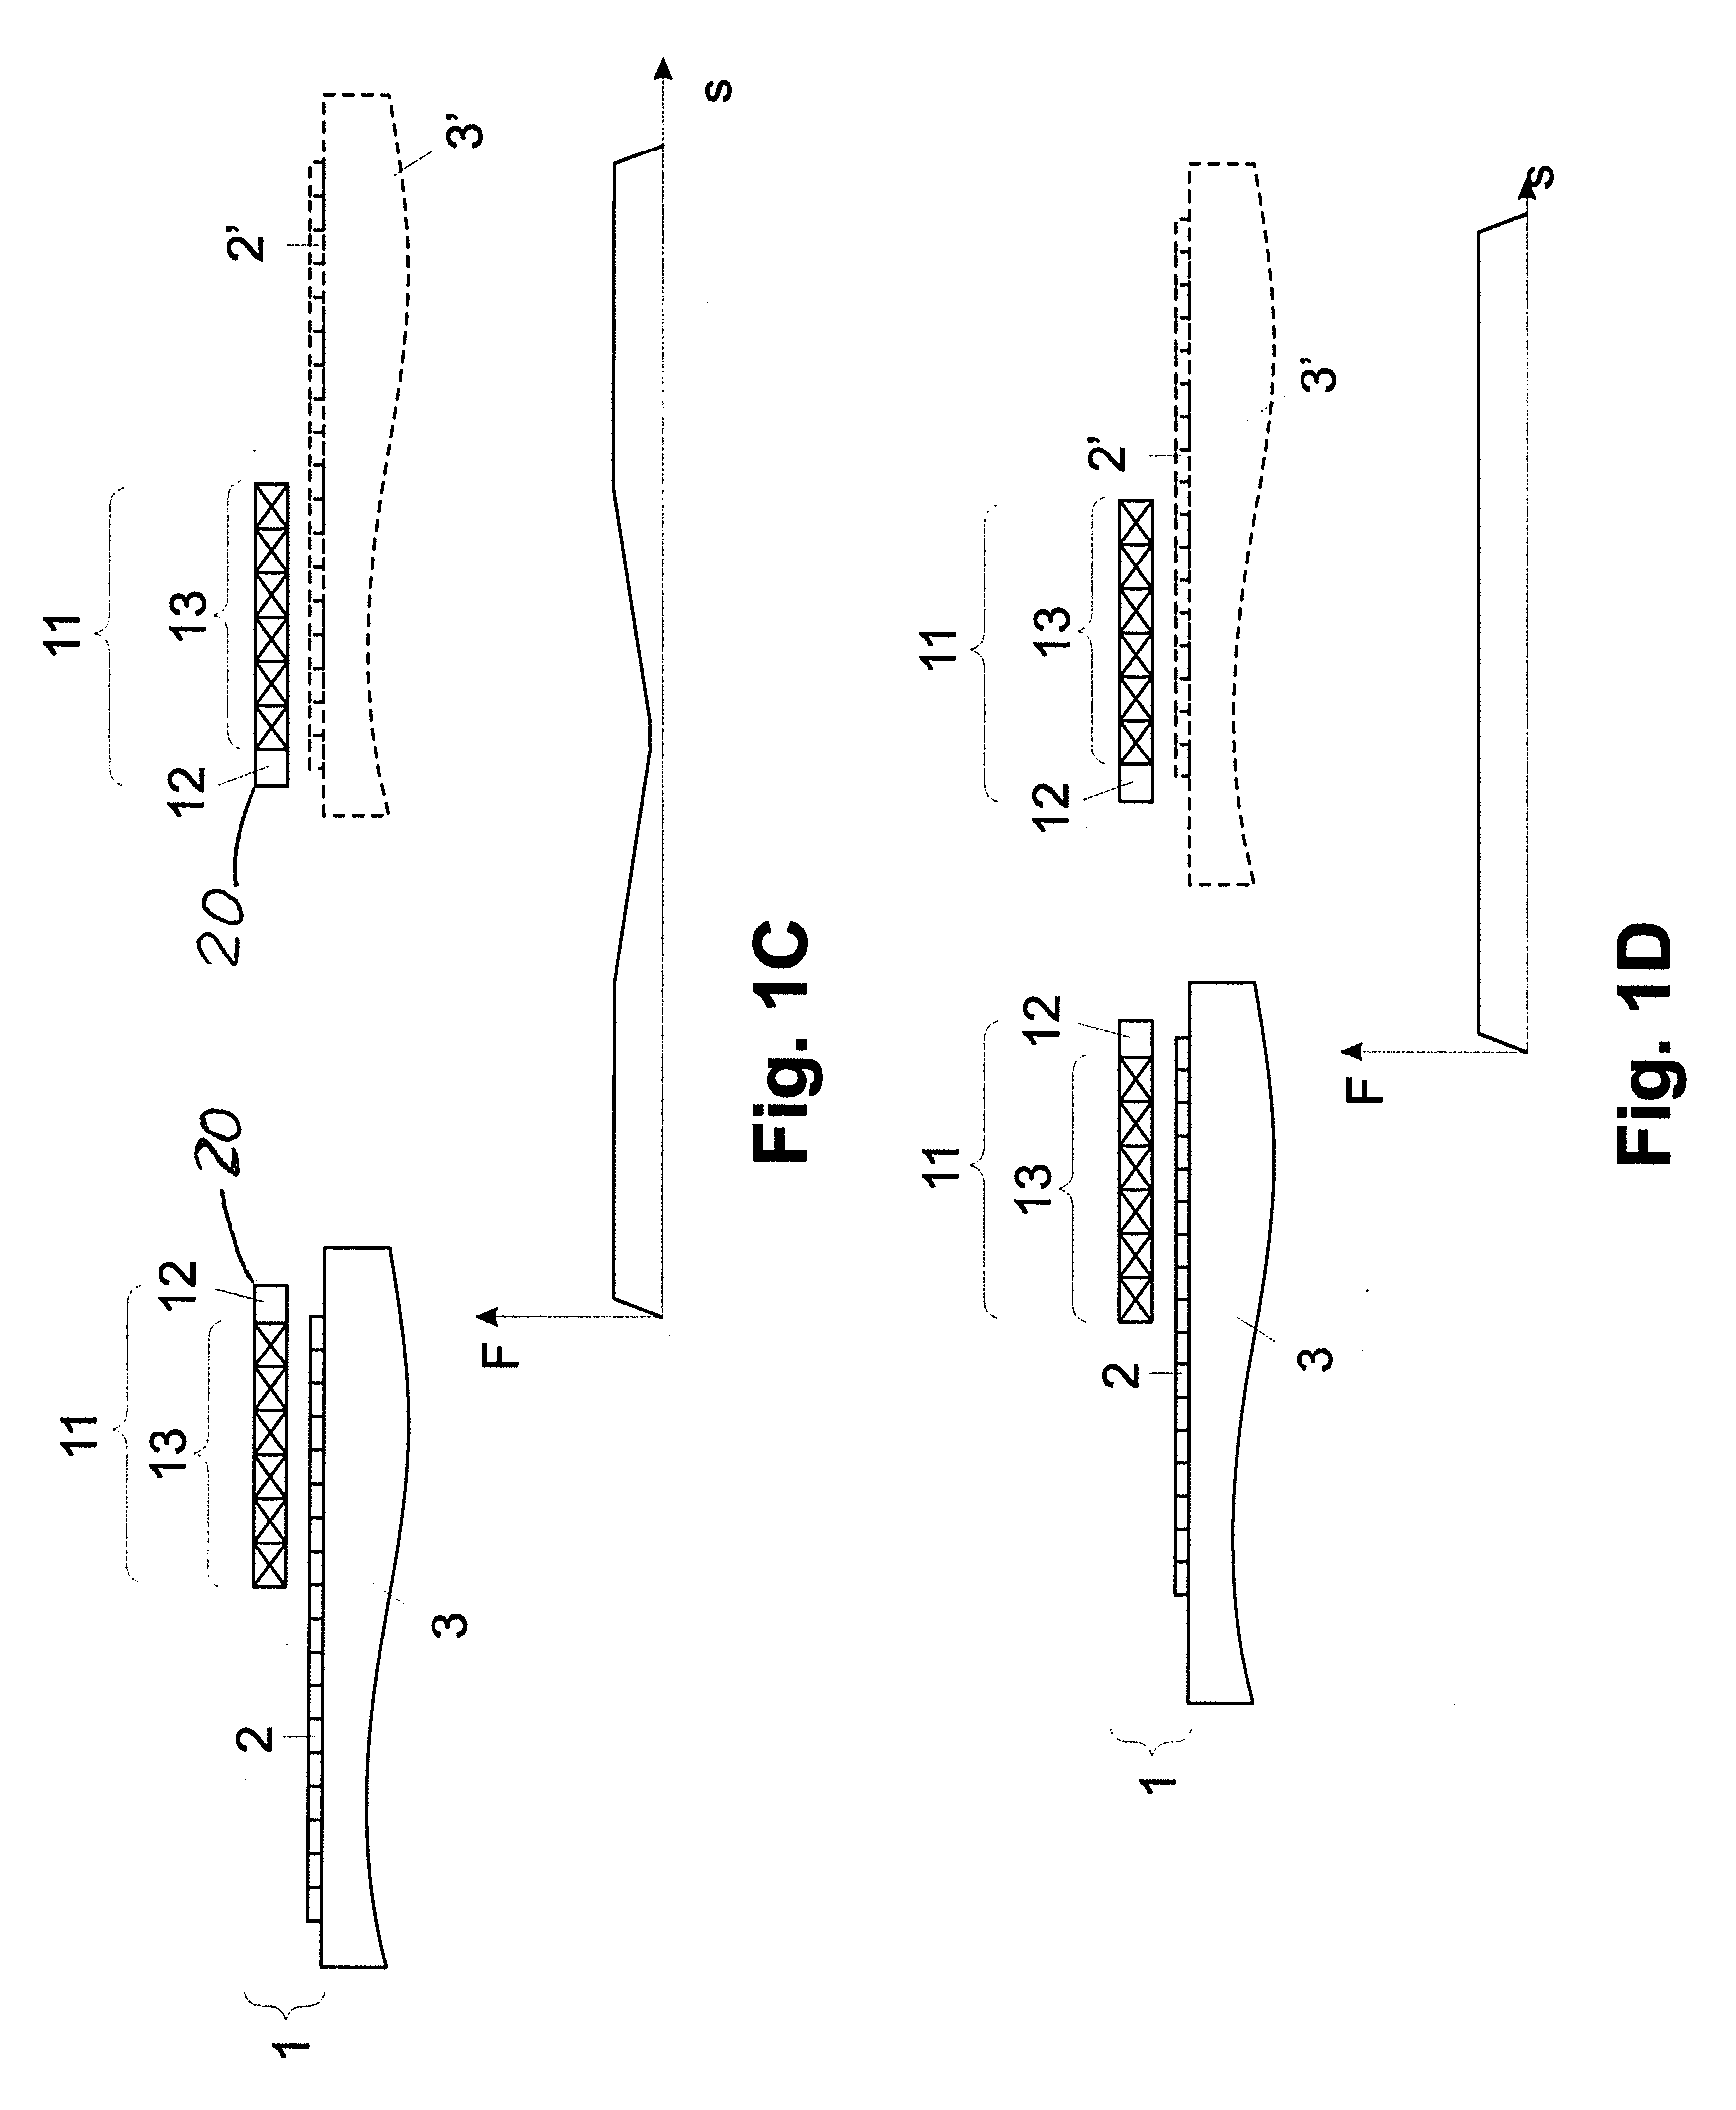 Arrangement of Stator Modules in a Linear Motor